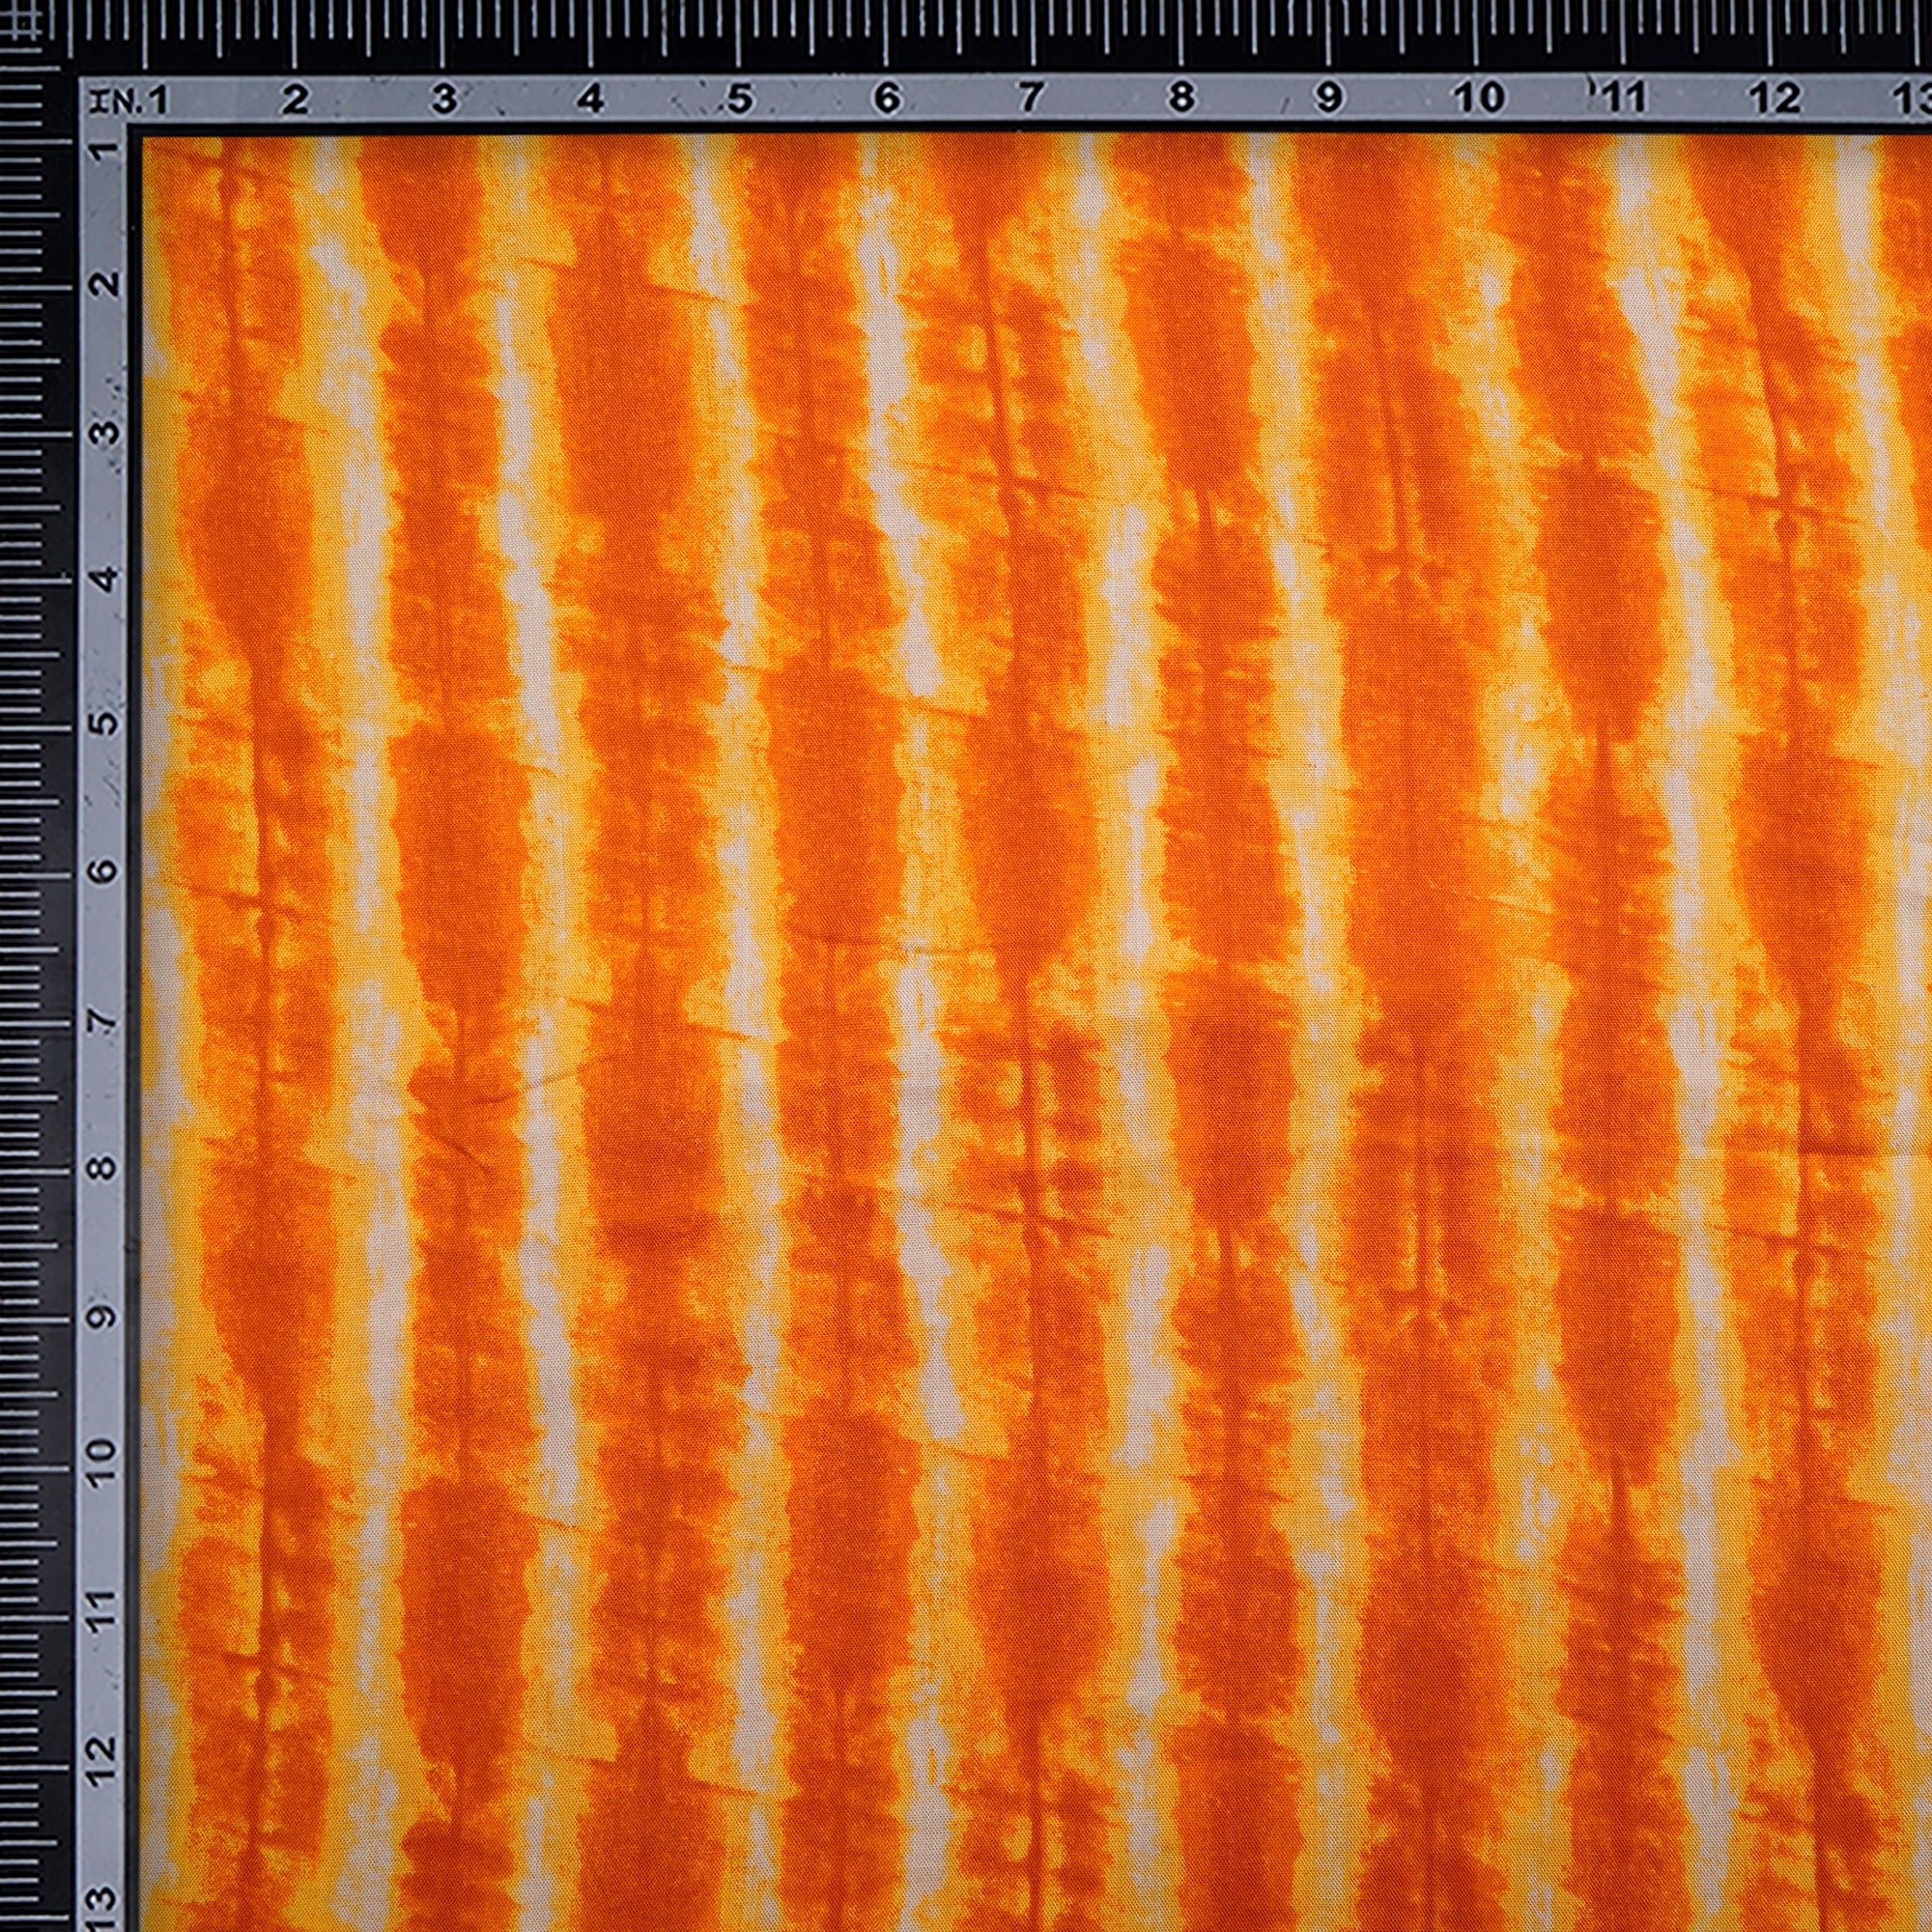 Orange-Yellow Color Printed Rayon Fabric